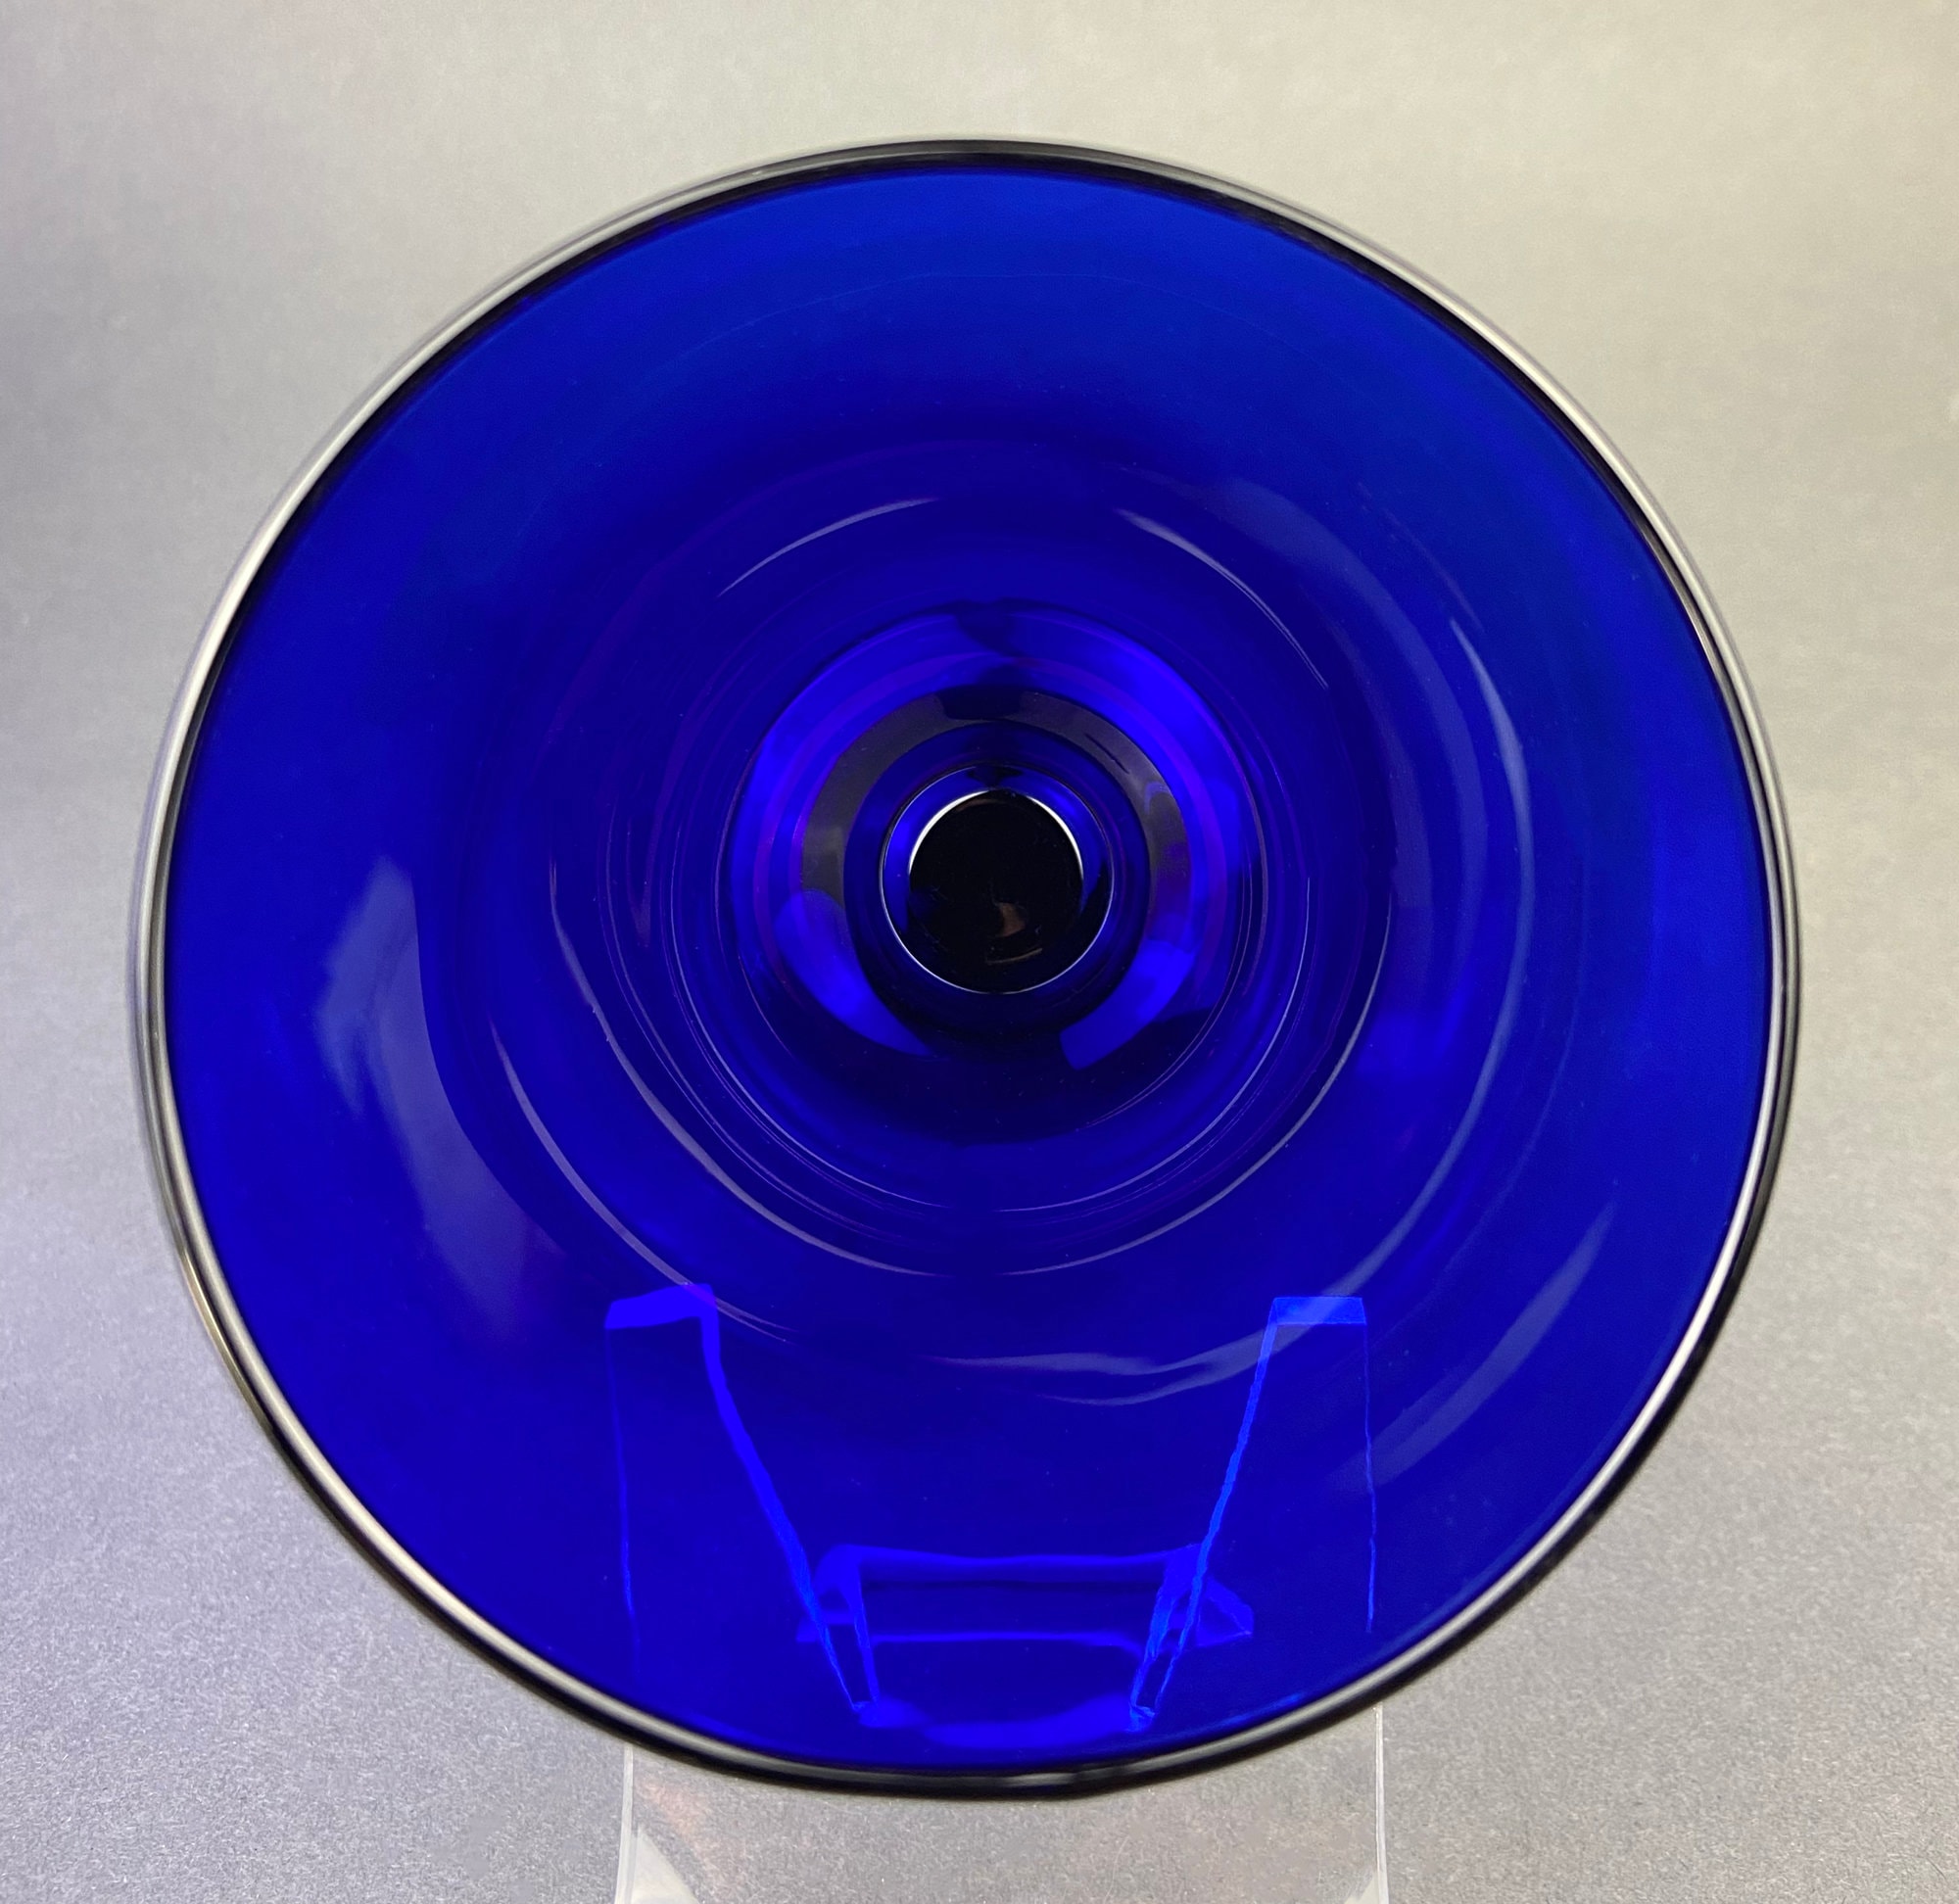 Cobalt Blue Glass Wine Glasses. Extra Tall Set of Five Contemporary Style  Stemware. Dark Blue Modern Glassware. Fine Dining.